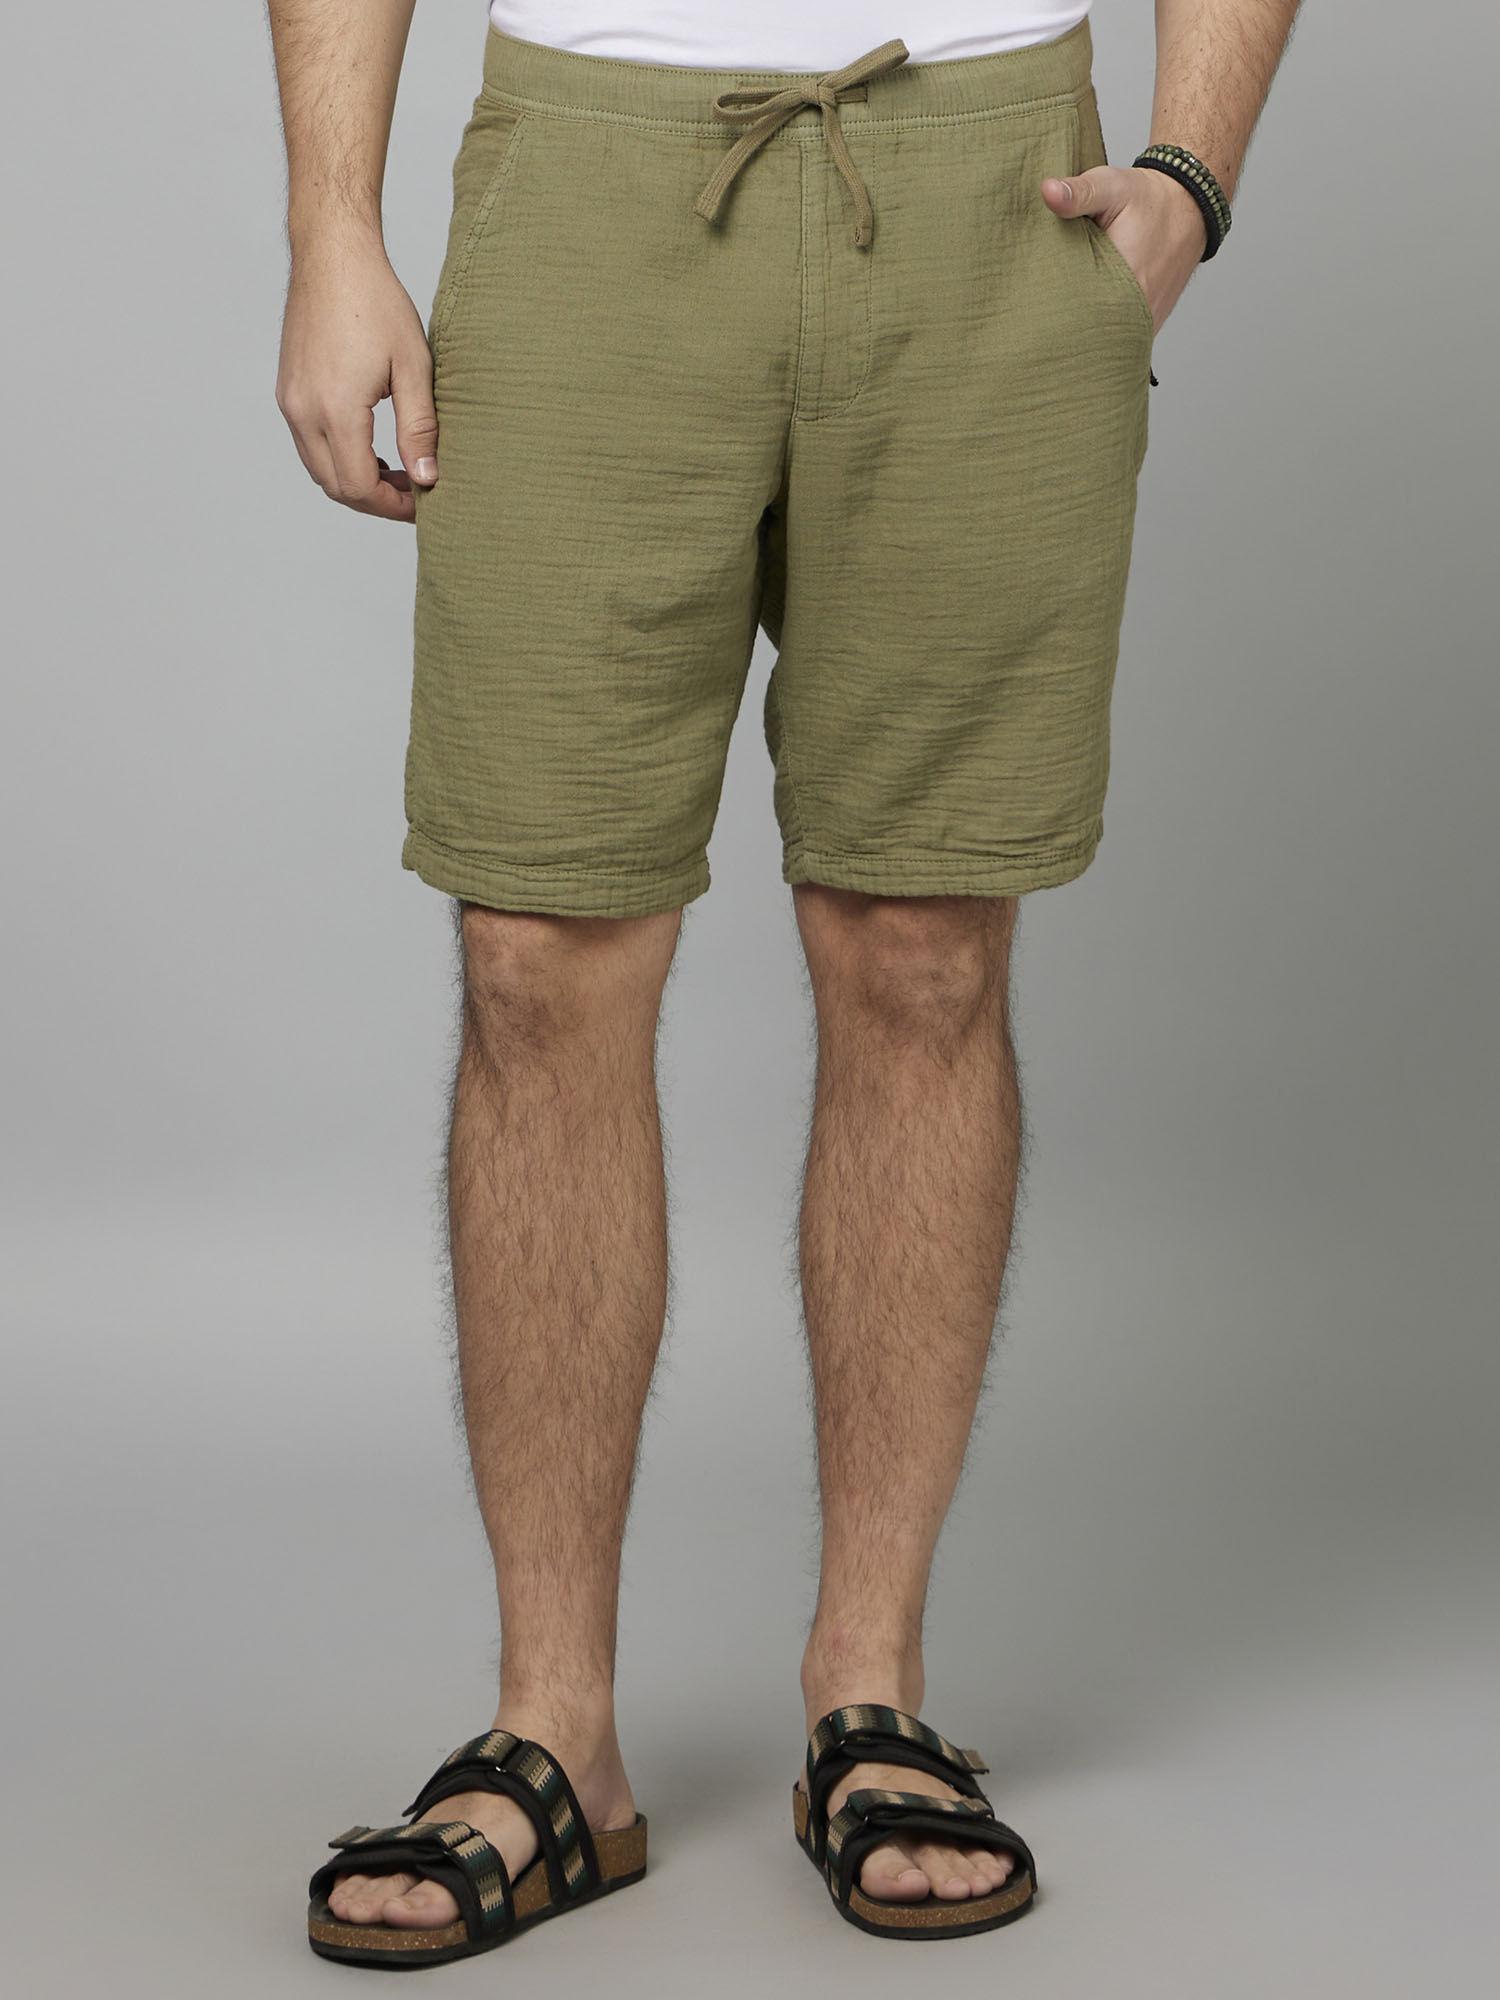 solid-olive-cotton-fashion-bermuda-shorts